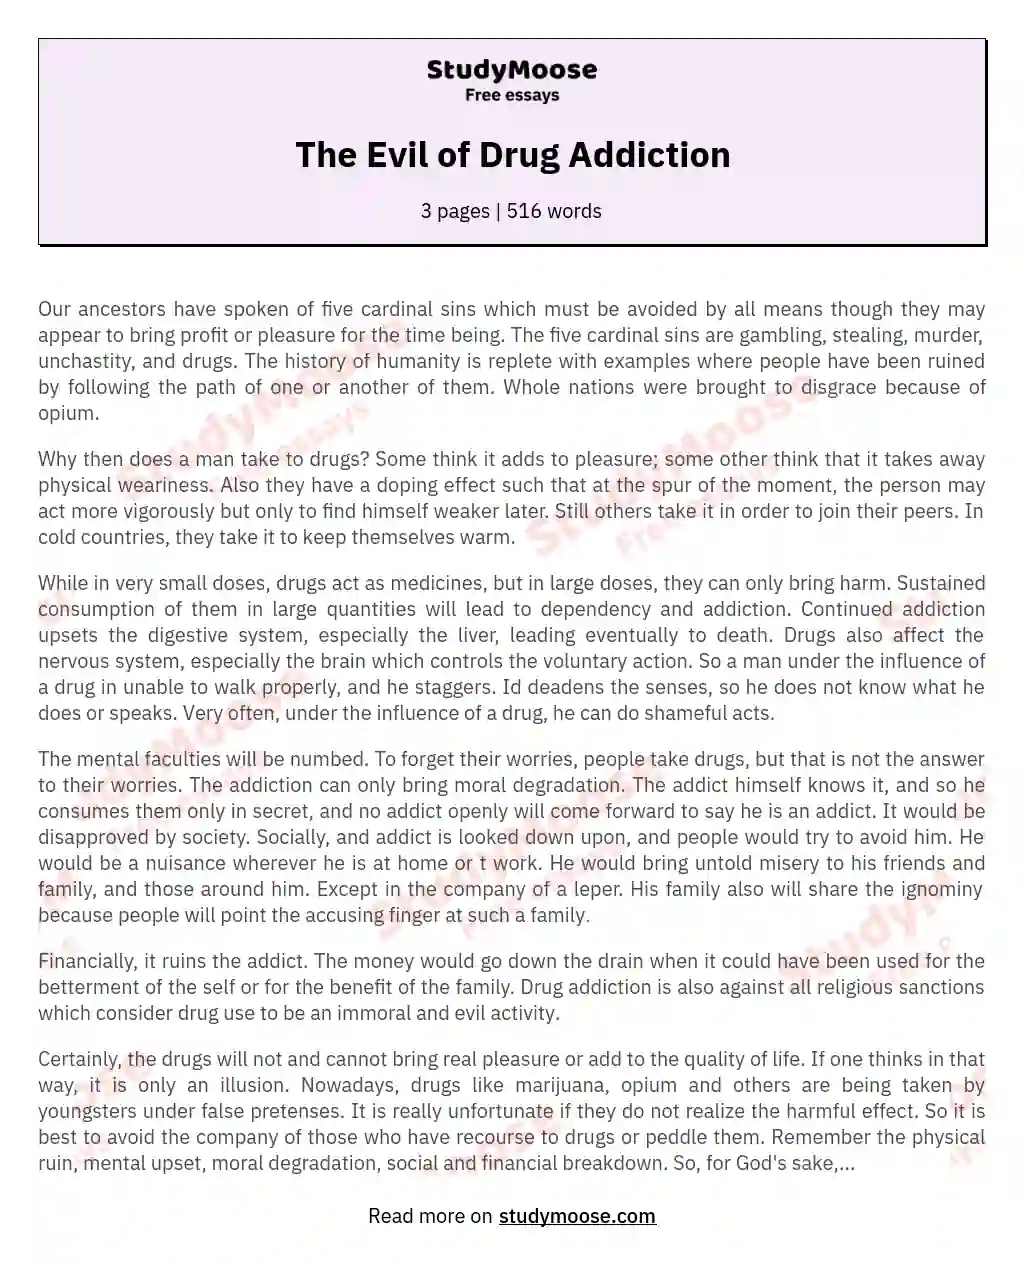 The Evil of Drug Addiction essay